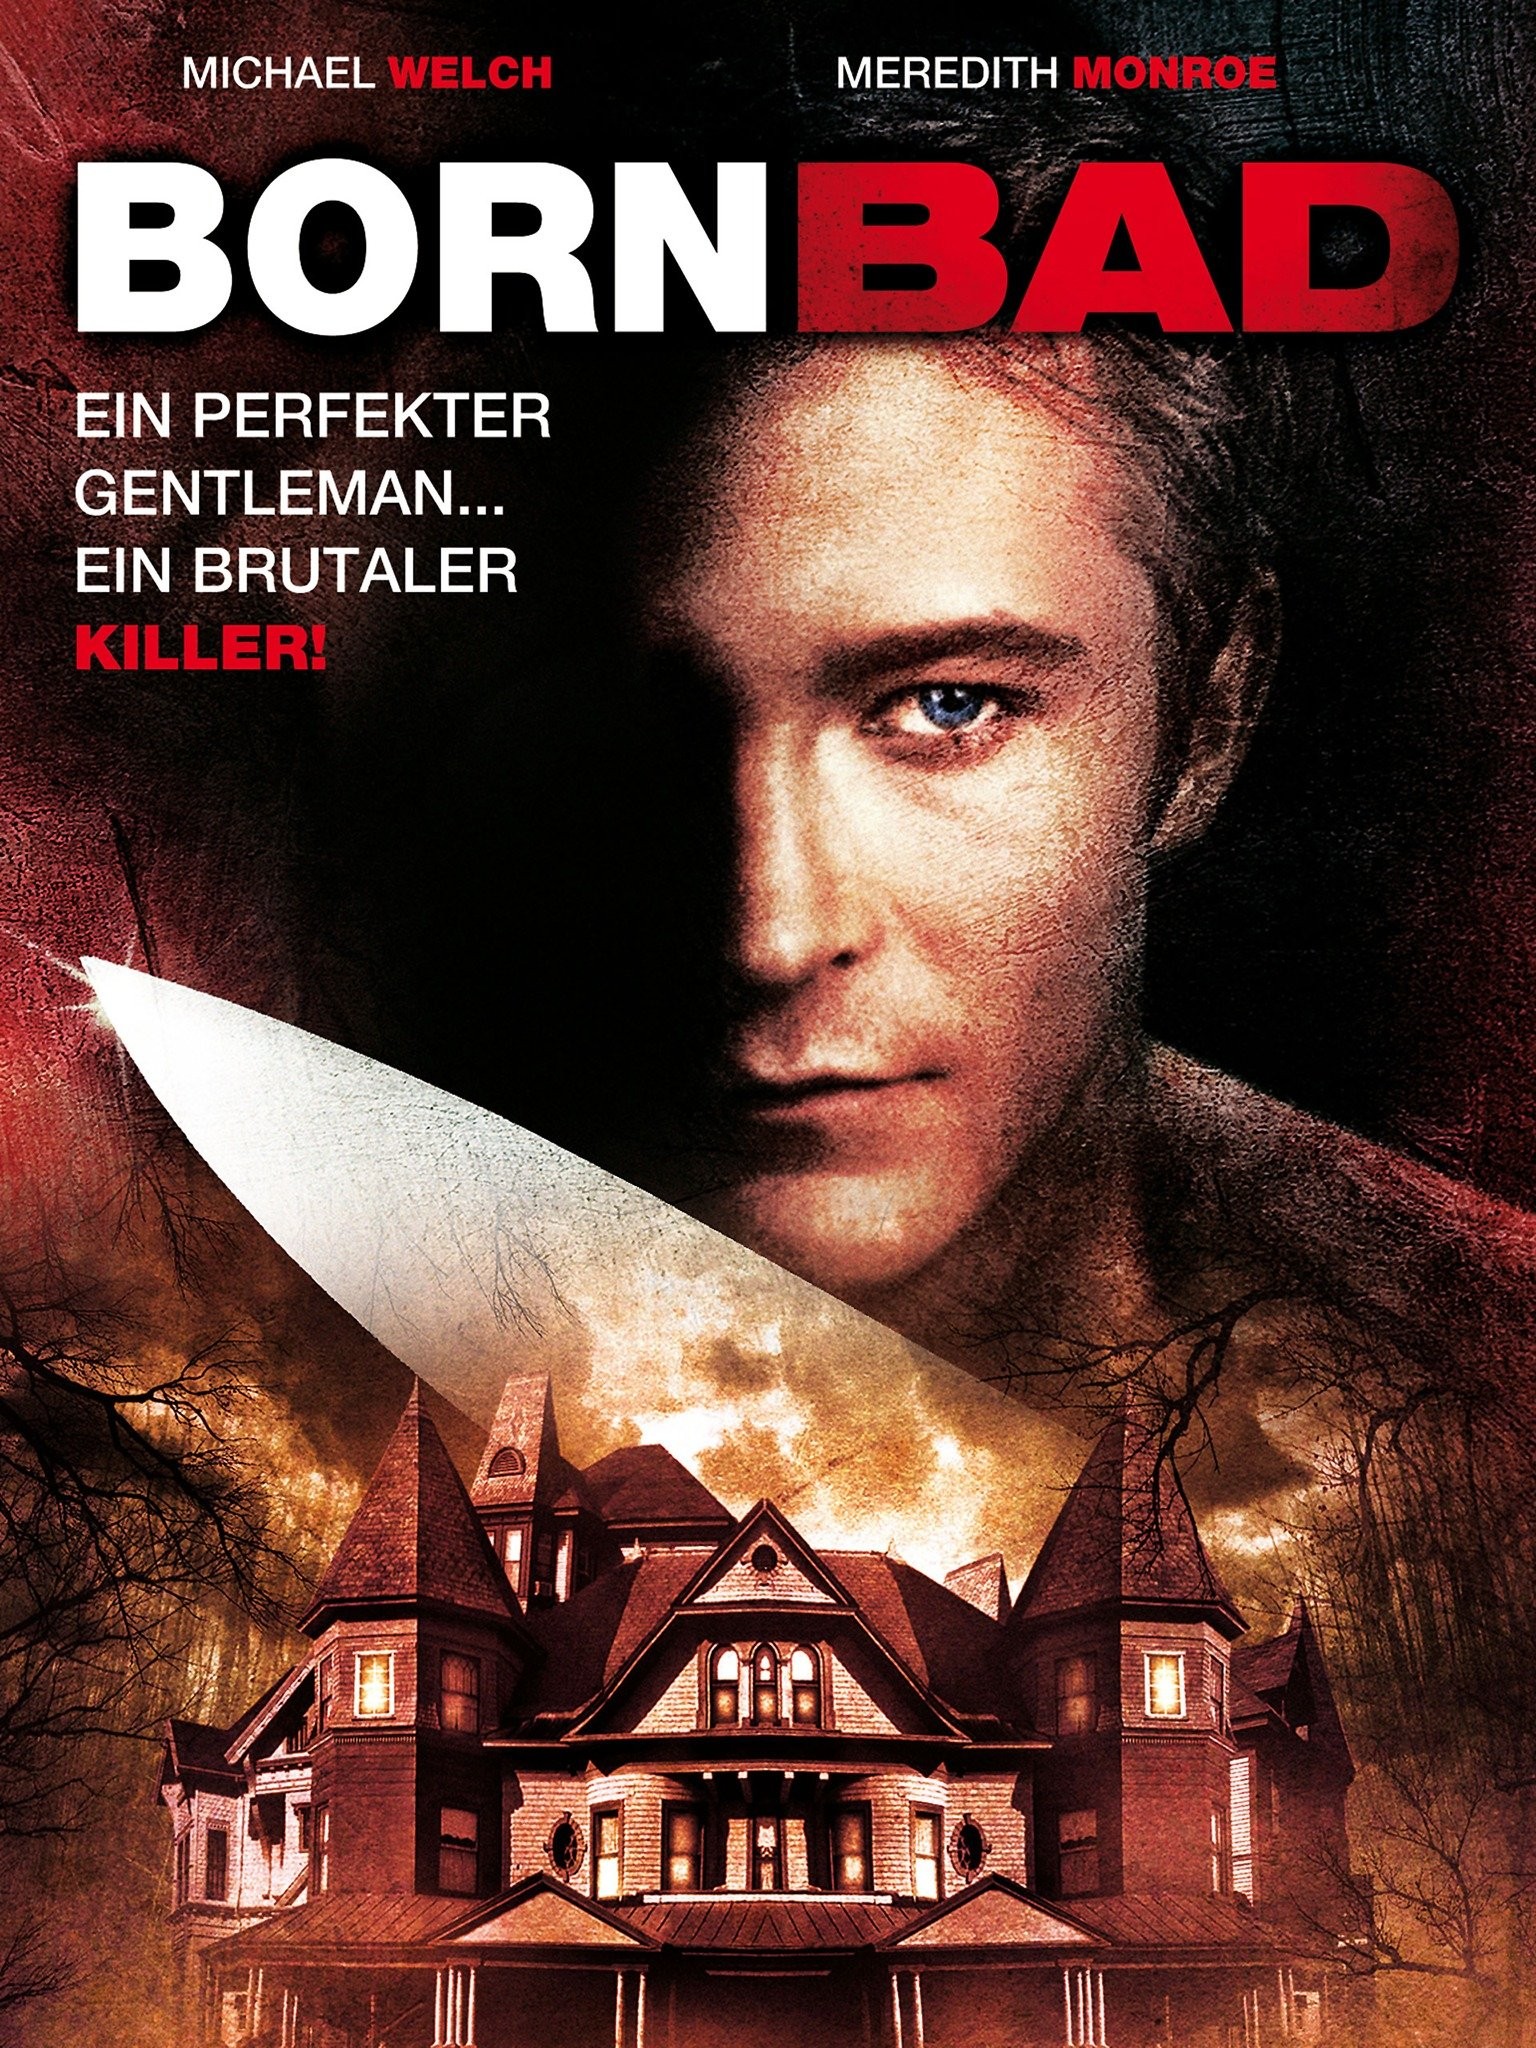 deandra clarke recommends Born Bad Full Movie